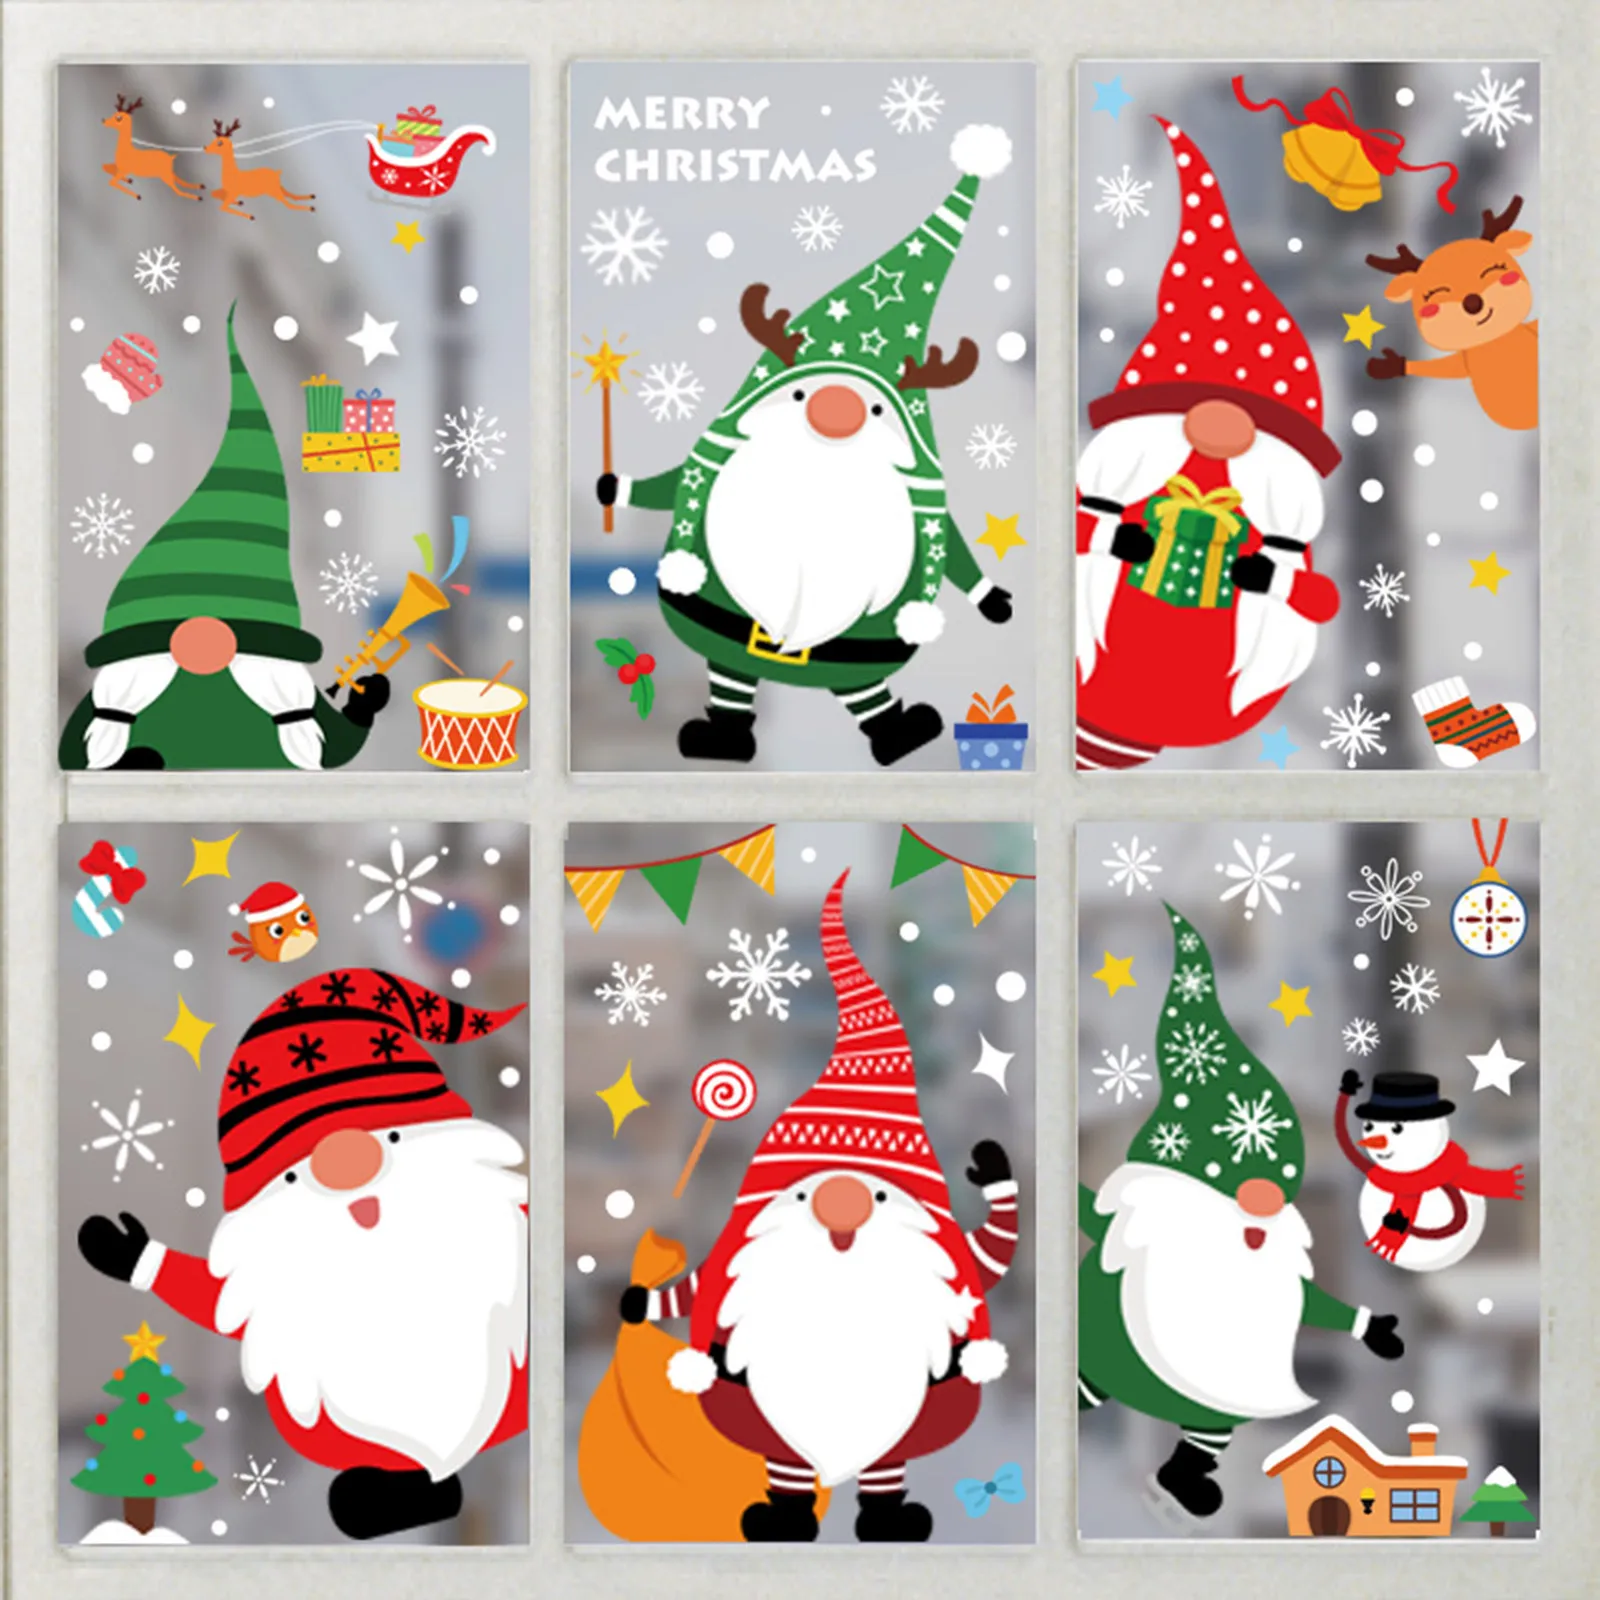 Christmas Window Clings 193 PCS Snowflake Window Clings Christmas Window Decals Decorations Window Stickers for Xmas Holiday